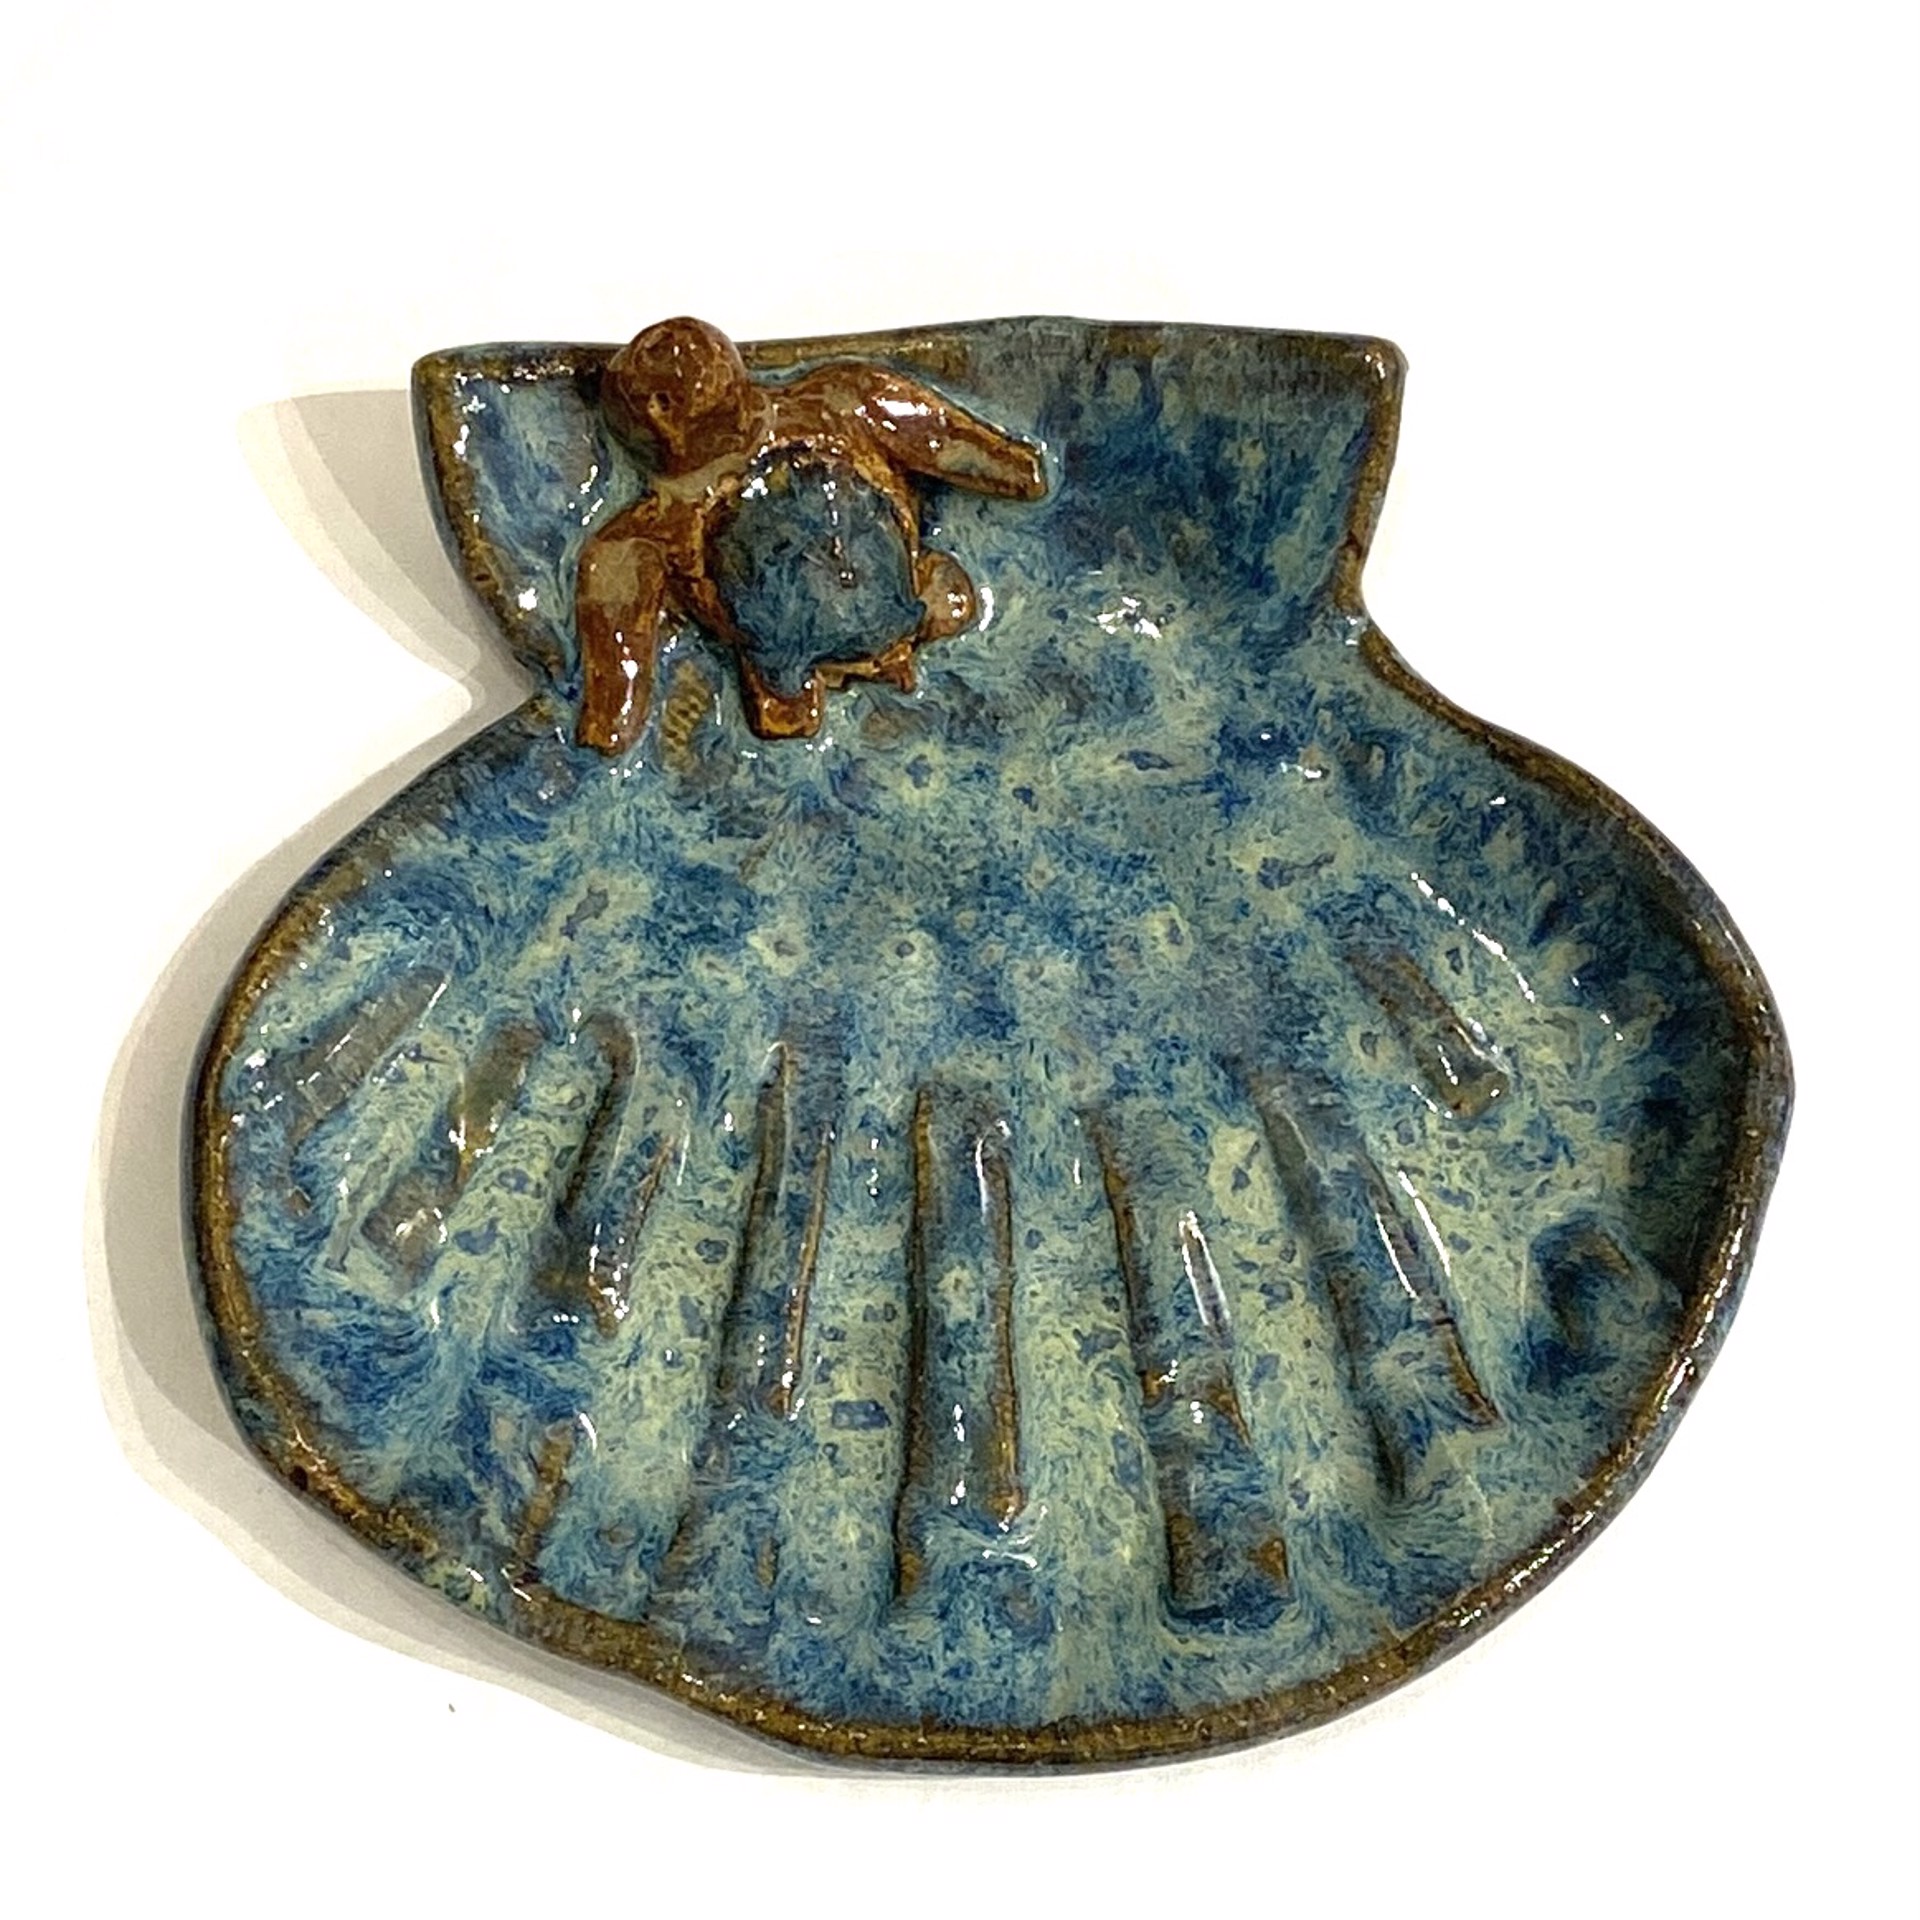 Shell Dish with Turtle (Blue Glaze) LG23-1044 by Jim & Steffi Logan